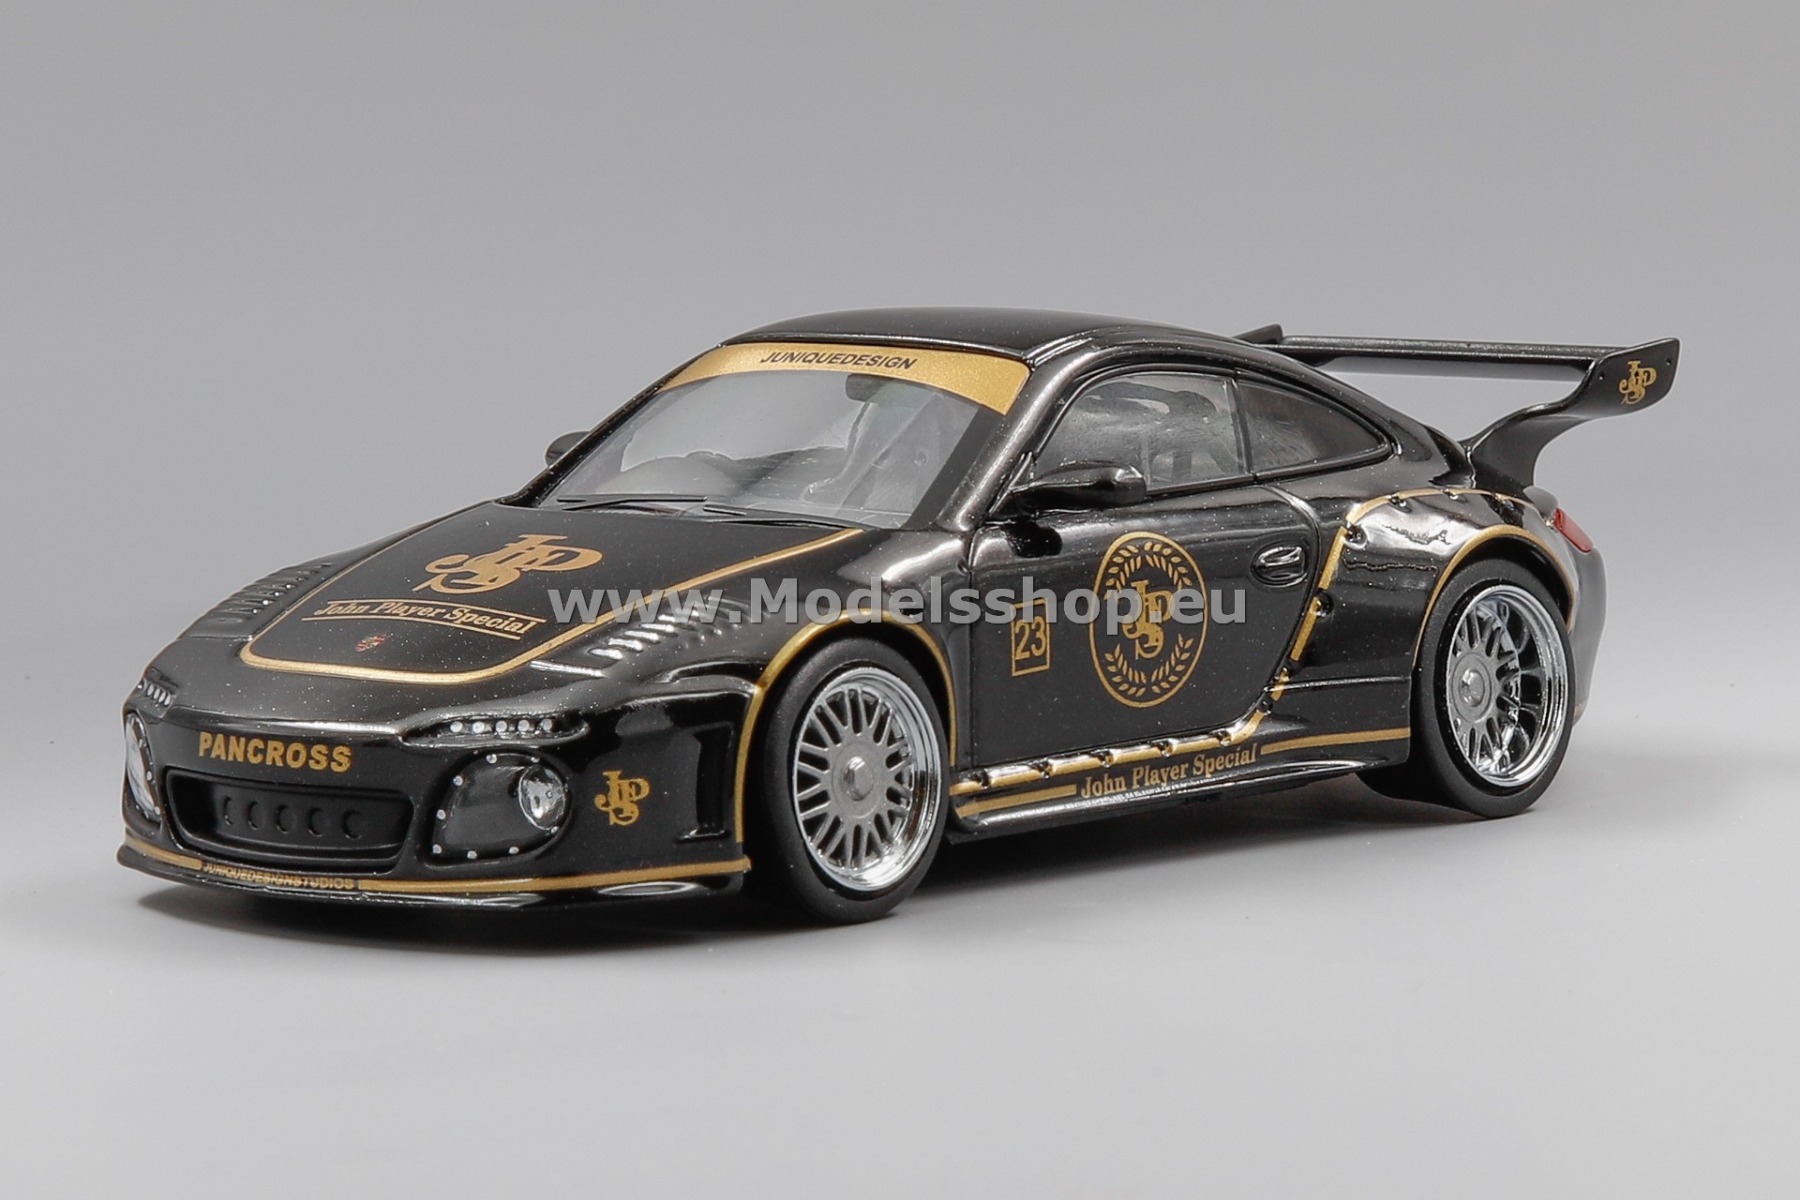 IXO MOC319 Porsche 911 (997) Old & New, black/Decorated, RHD, 